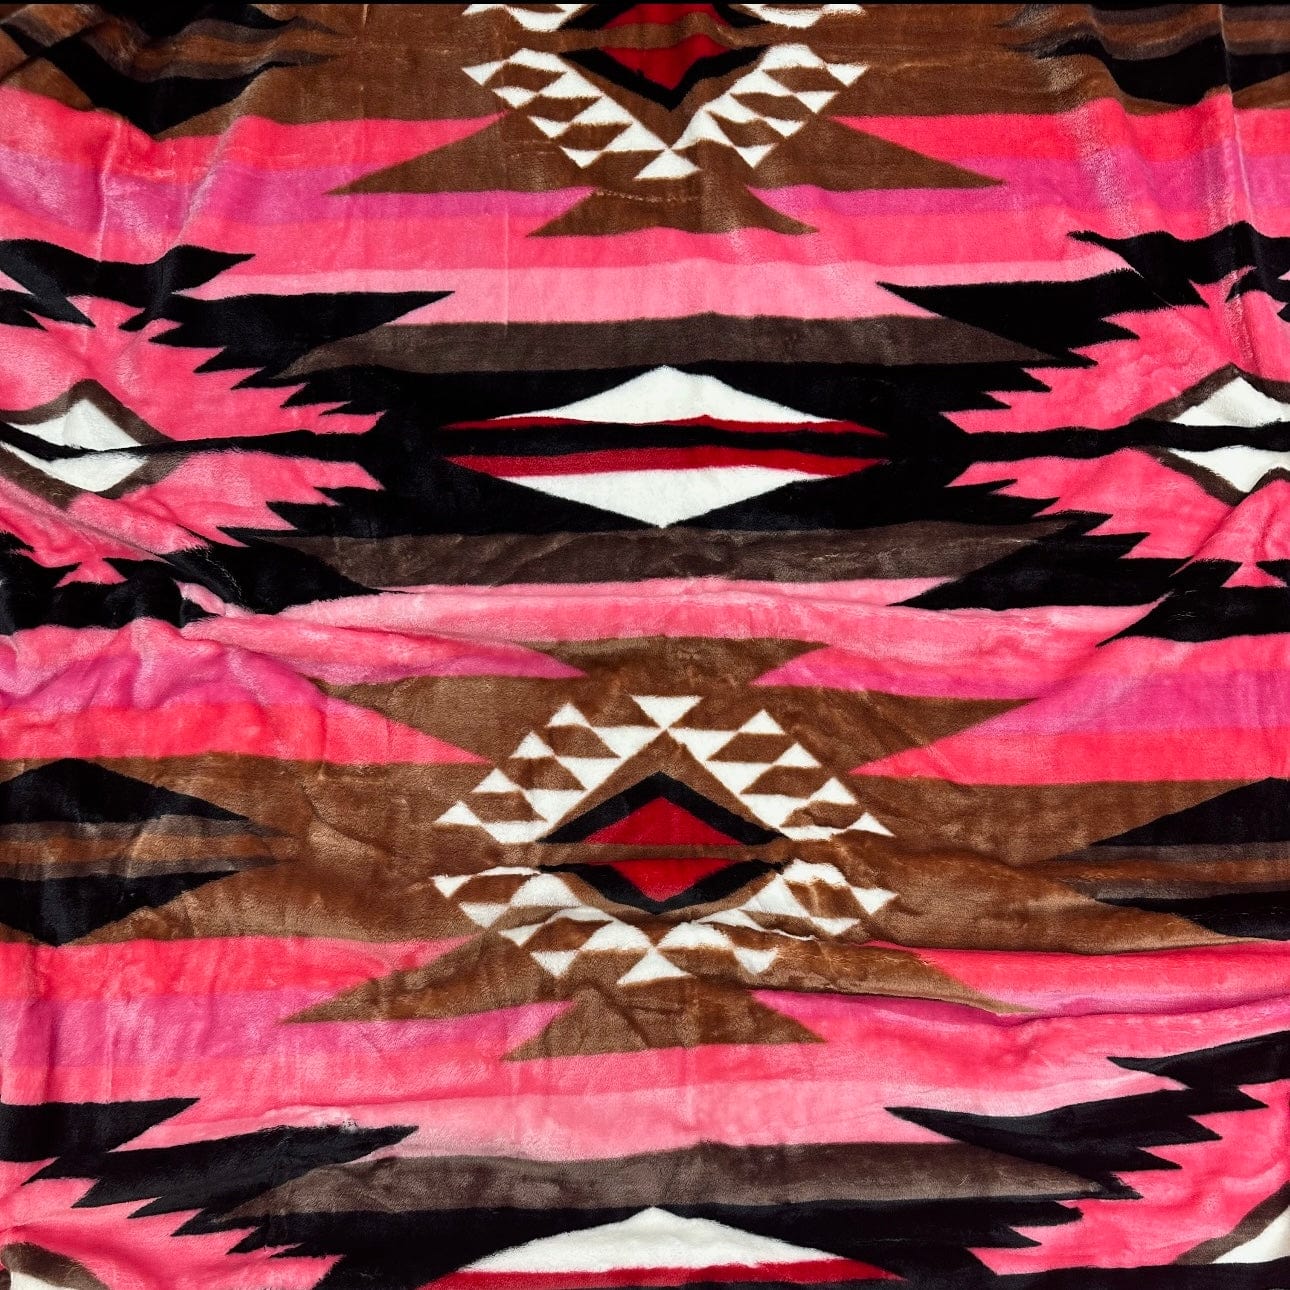 Envy Stylz Boutique Blanket Pink Valley Southwestern Oversized Blanket 82"x90"